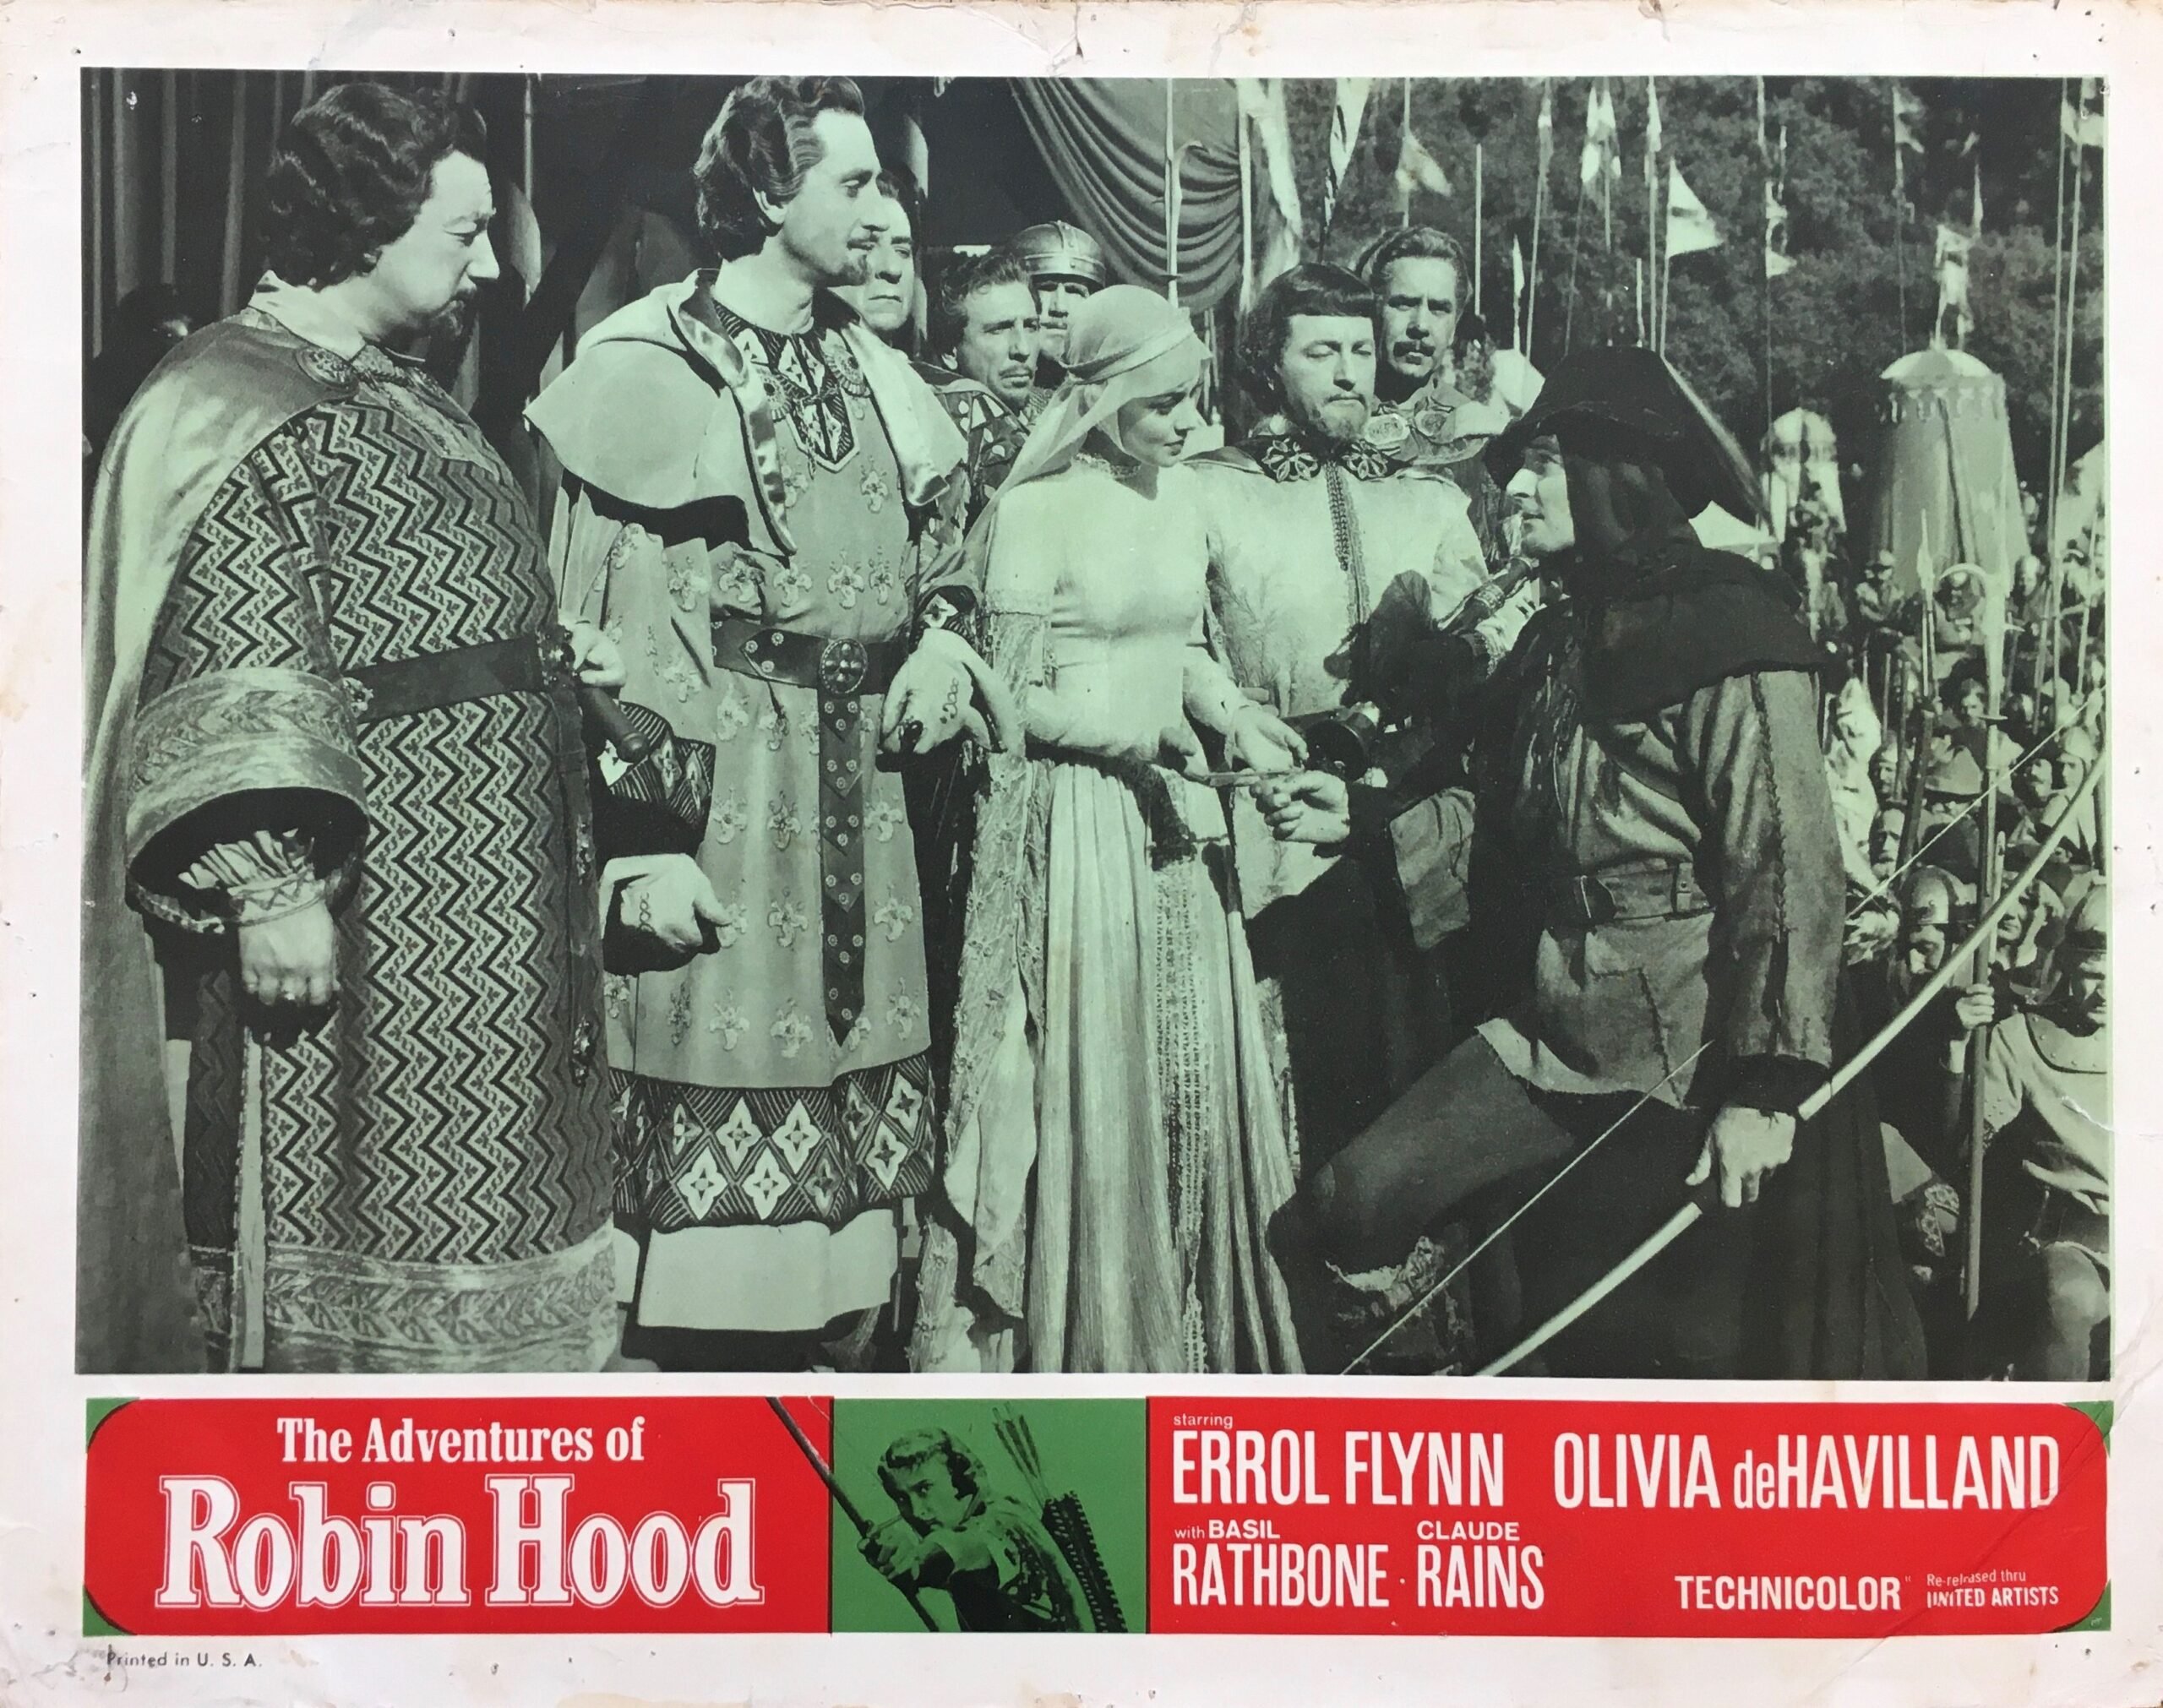 Vintage original US cinema lobby card poster for sale for Errol Flynn and Olivia de Havilland in The Adventures of Robin Hood.